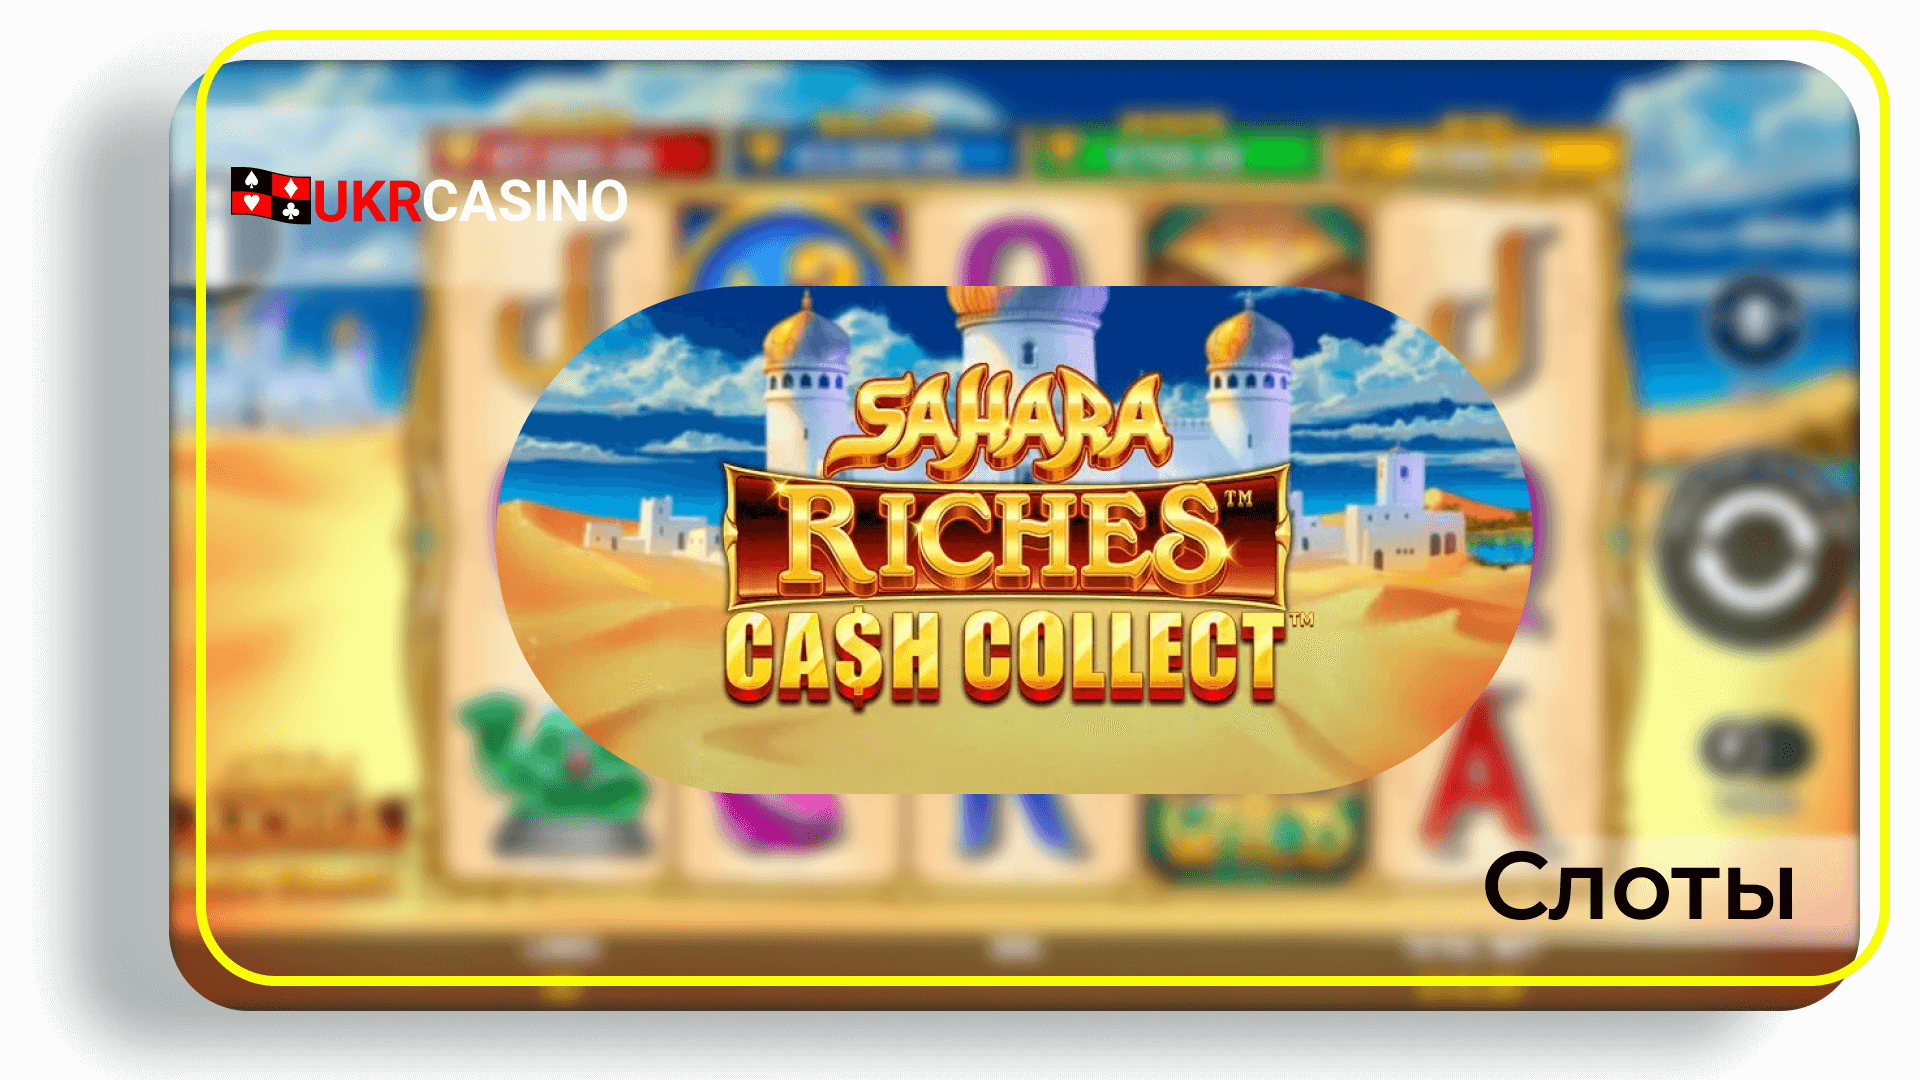 Sahara Riches Cash Collect - Playtech